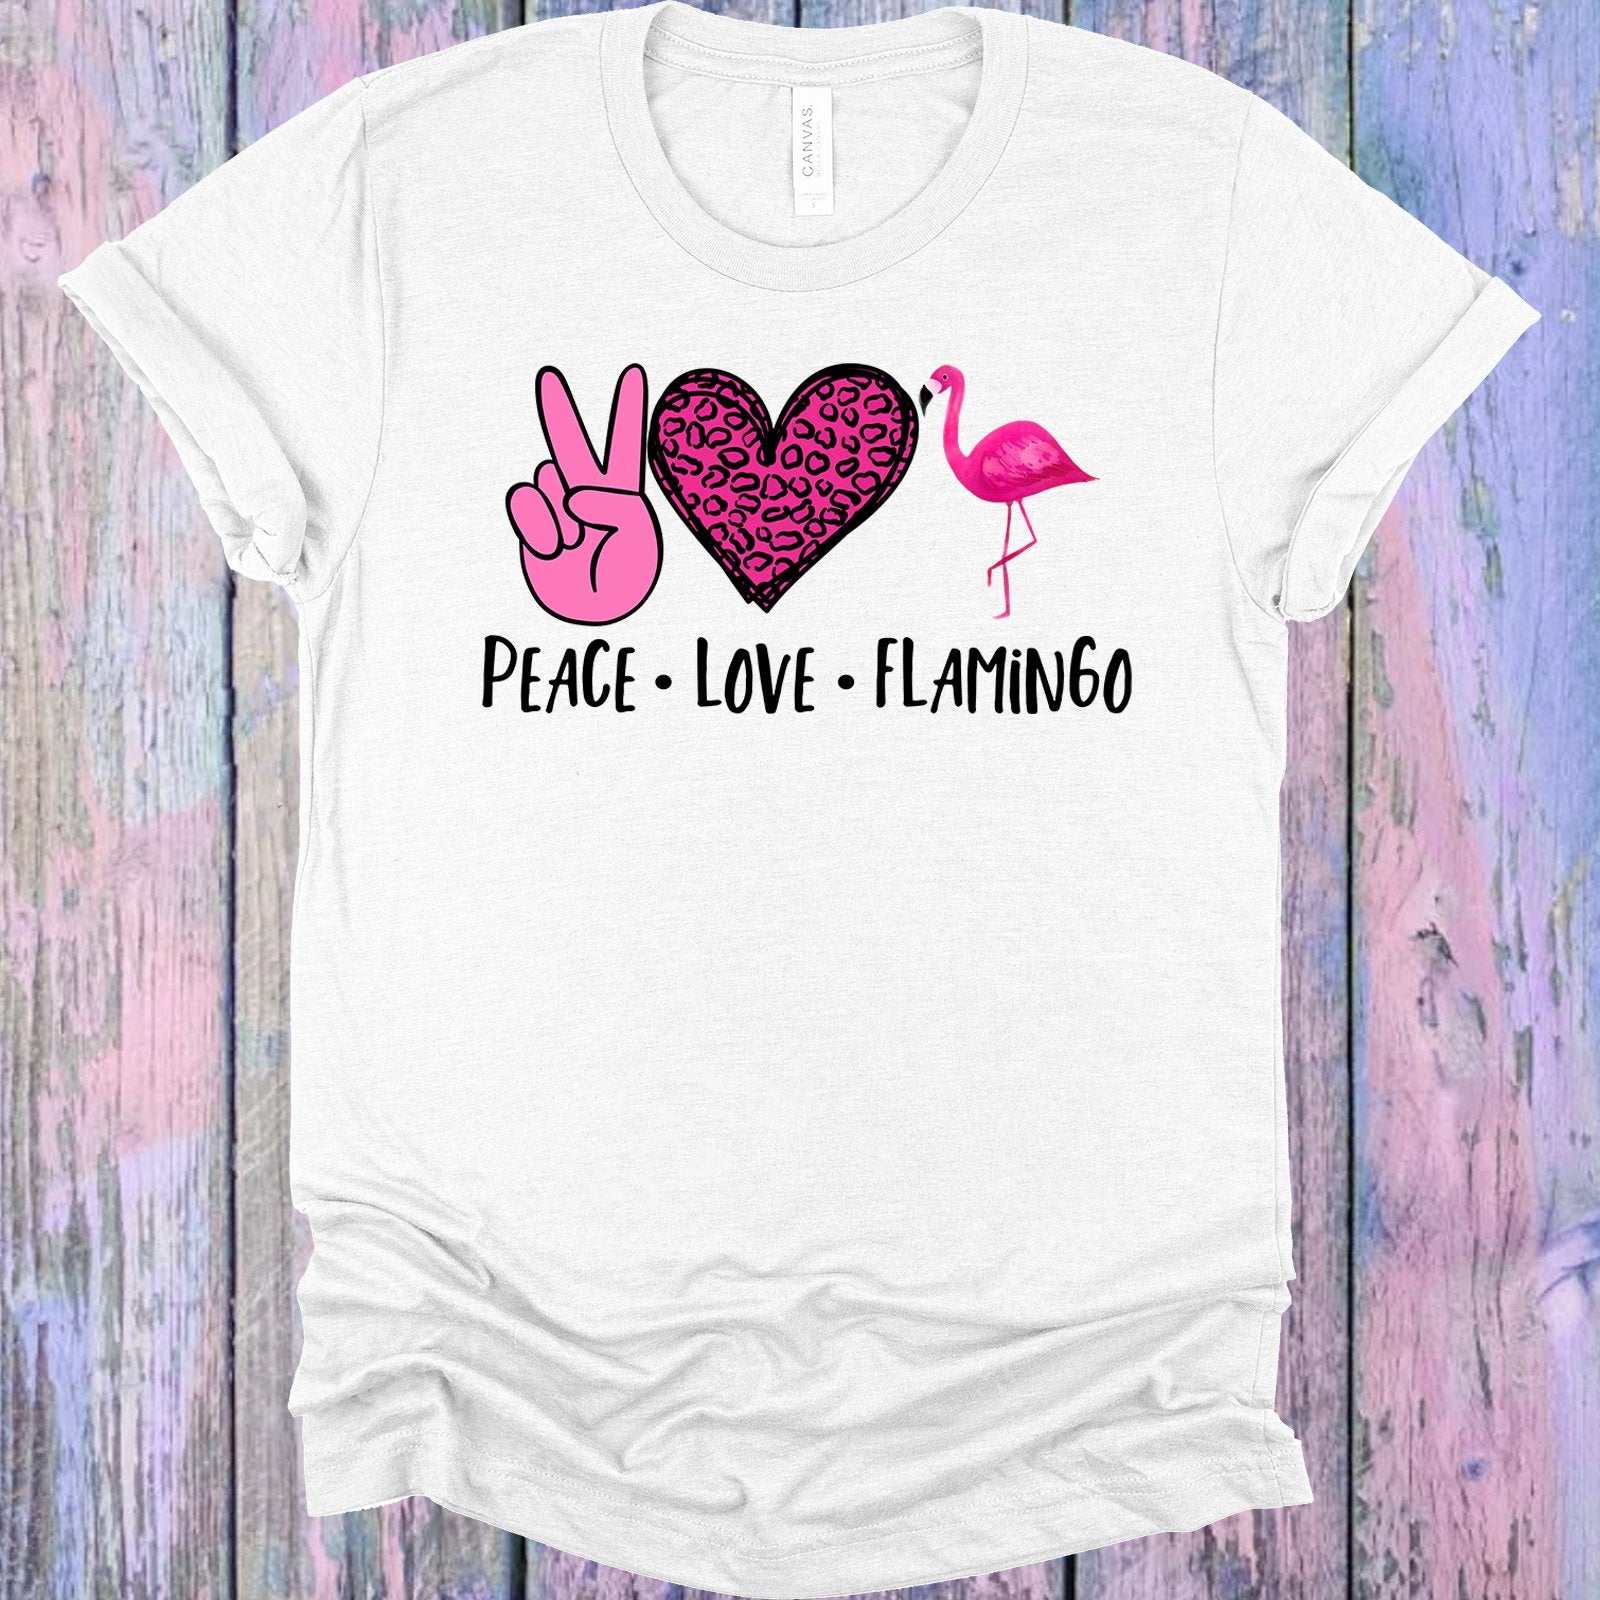 Peace Love Flamingo Graphic Tee Graphic Tee